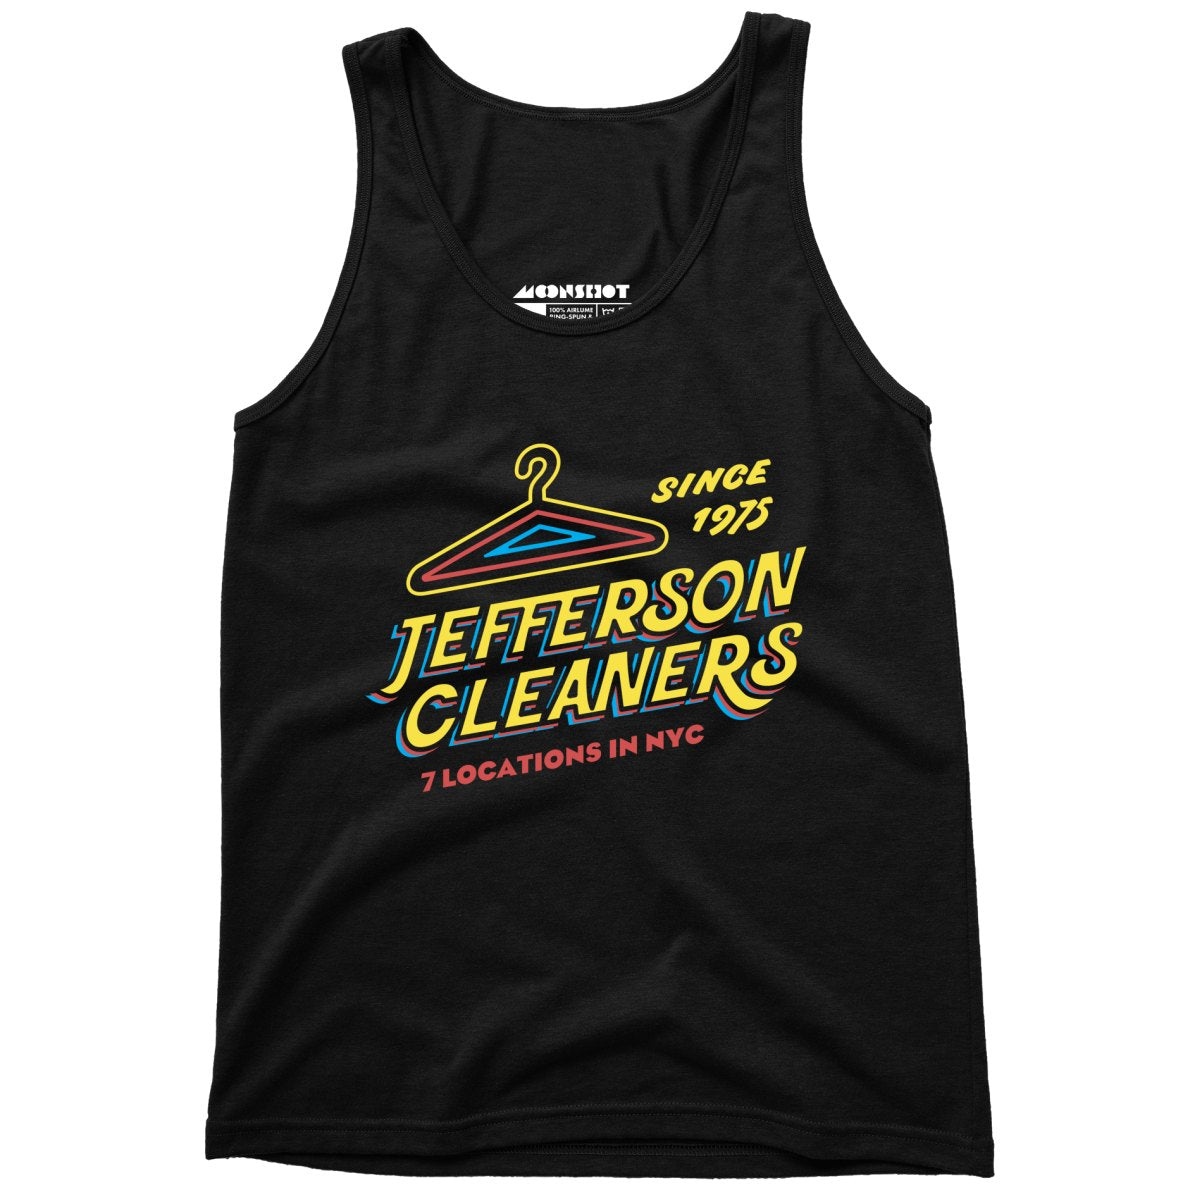 Jefferson Cleaners - Unisex Tank Top